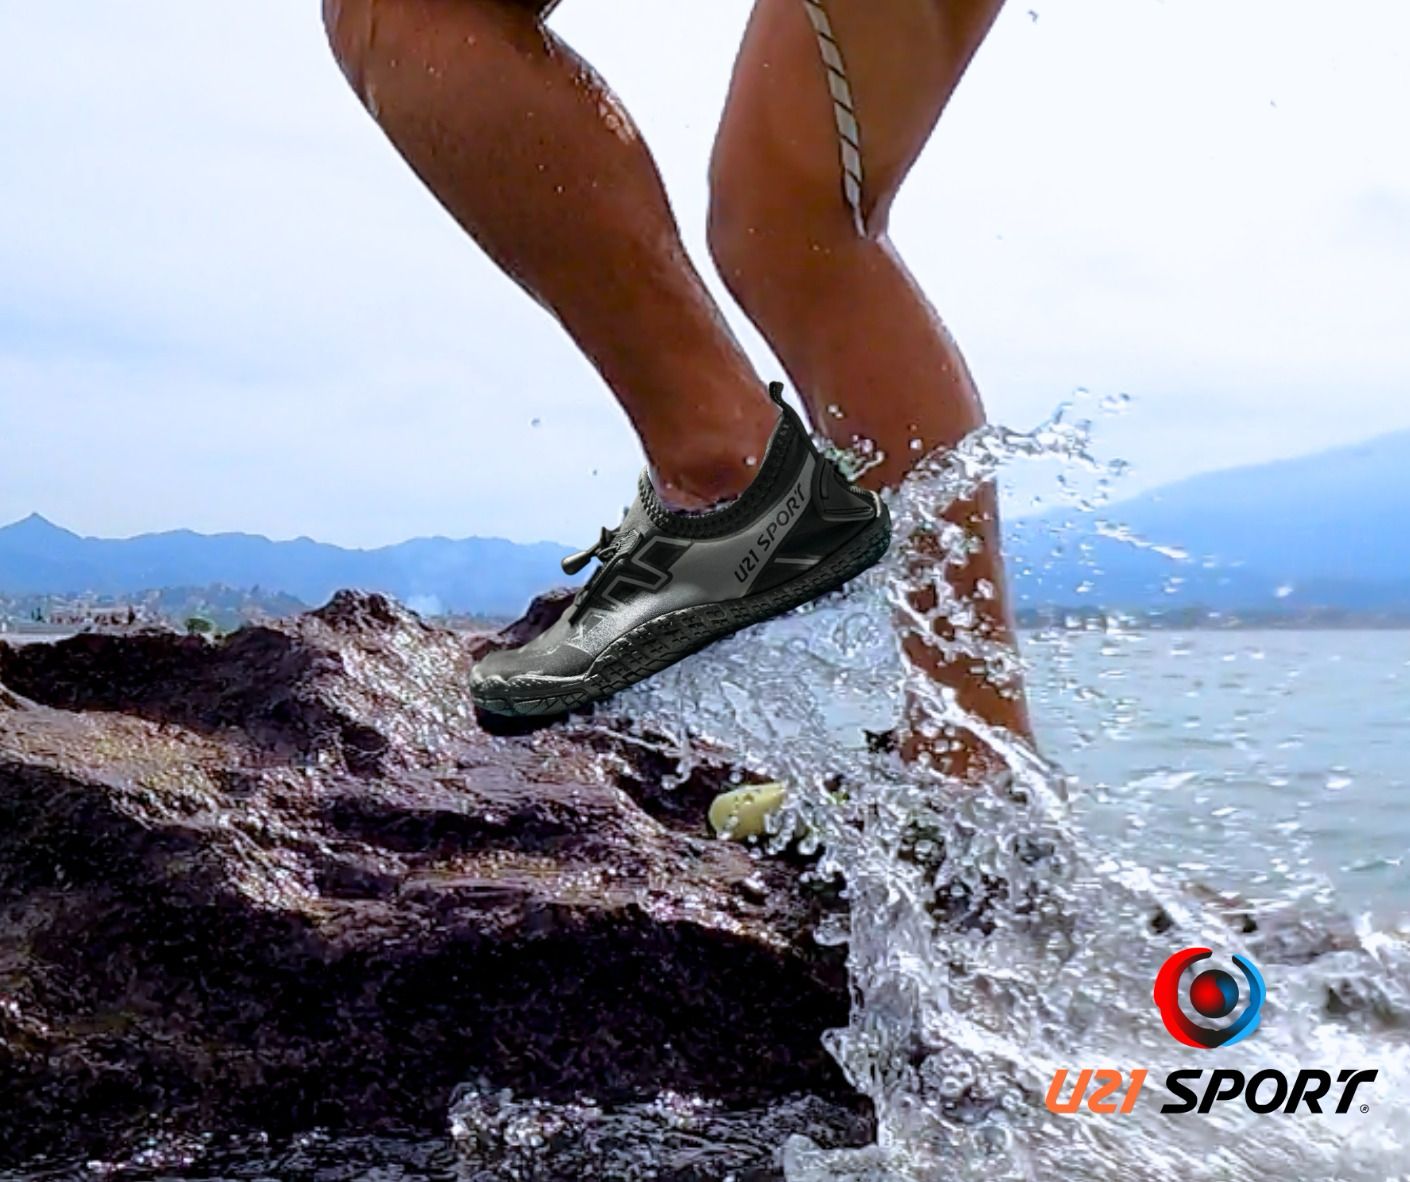 Zapato acuatico de secado ultra rapido modelo blackbeach original de uzi sport